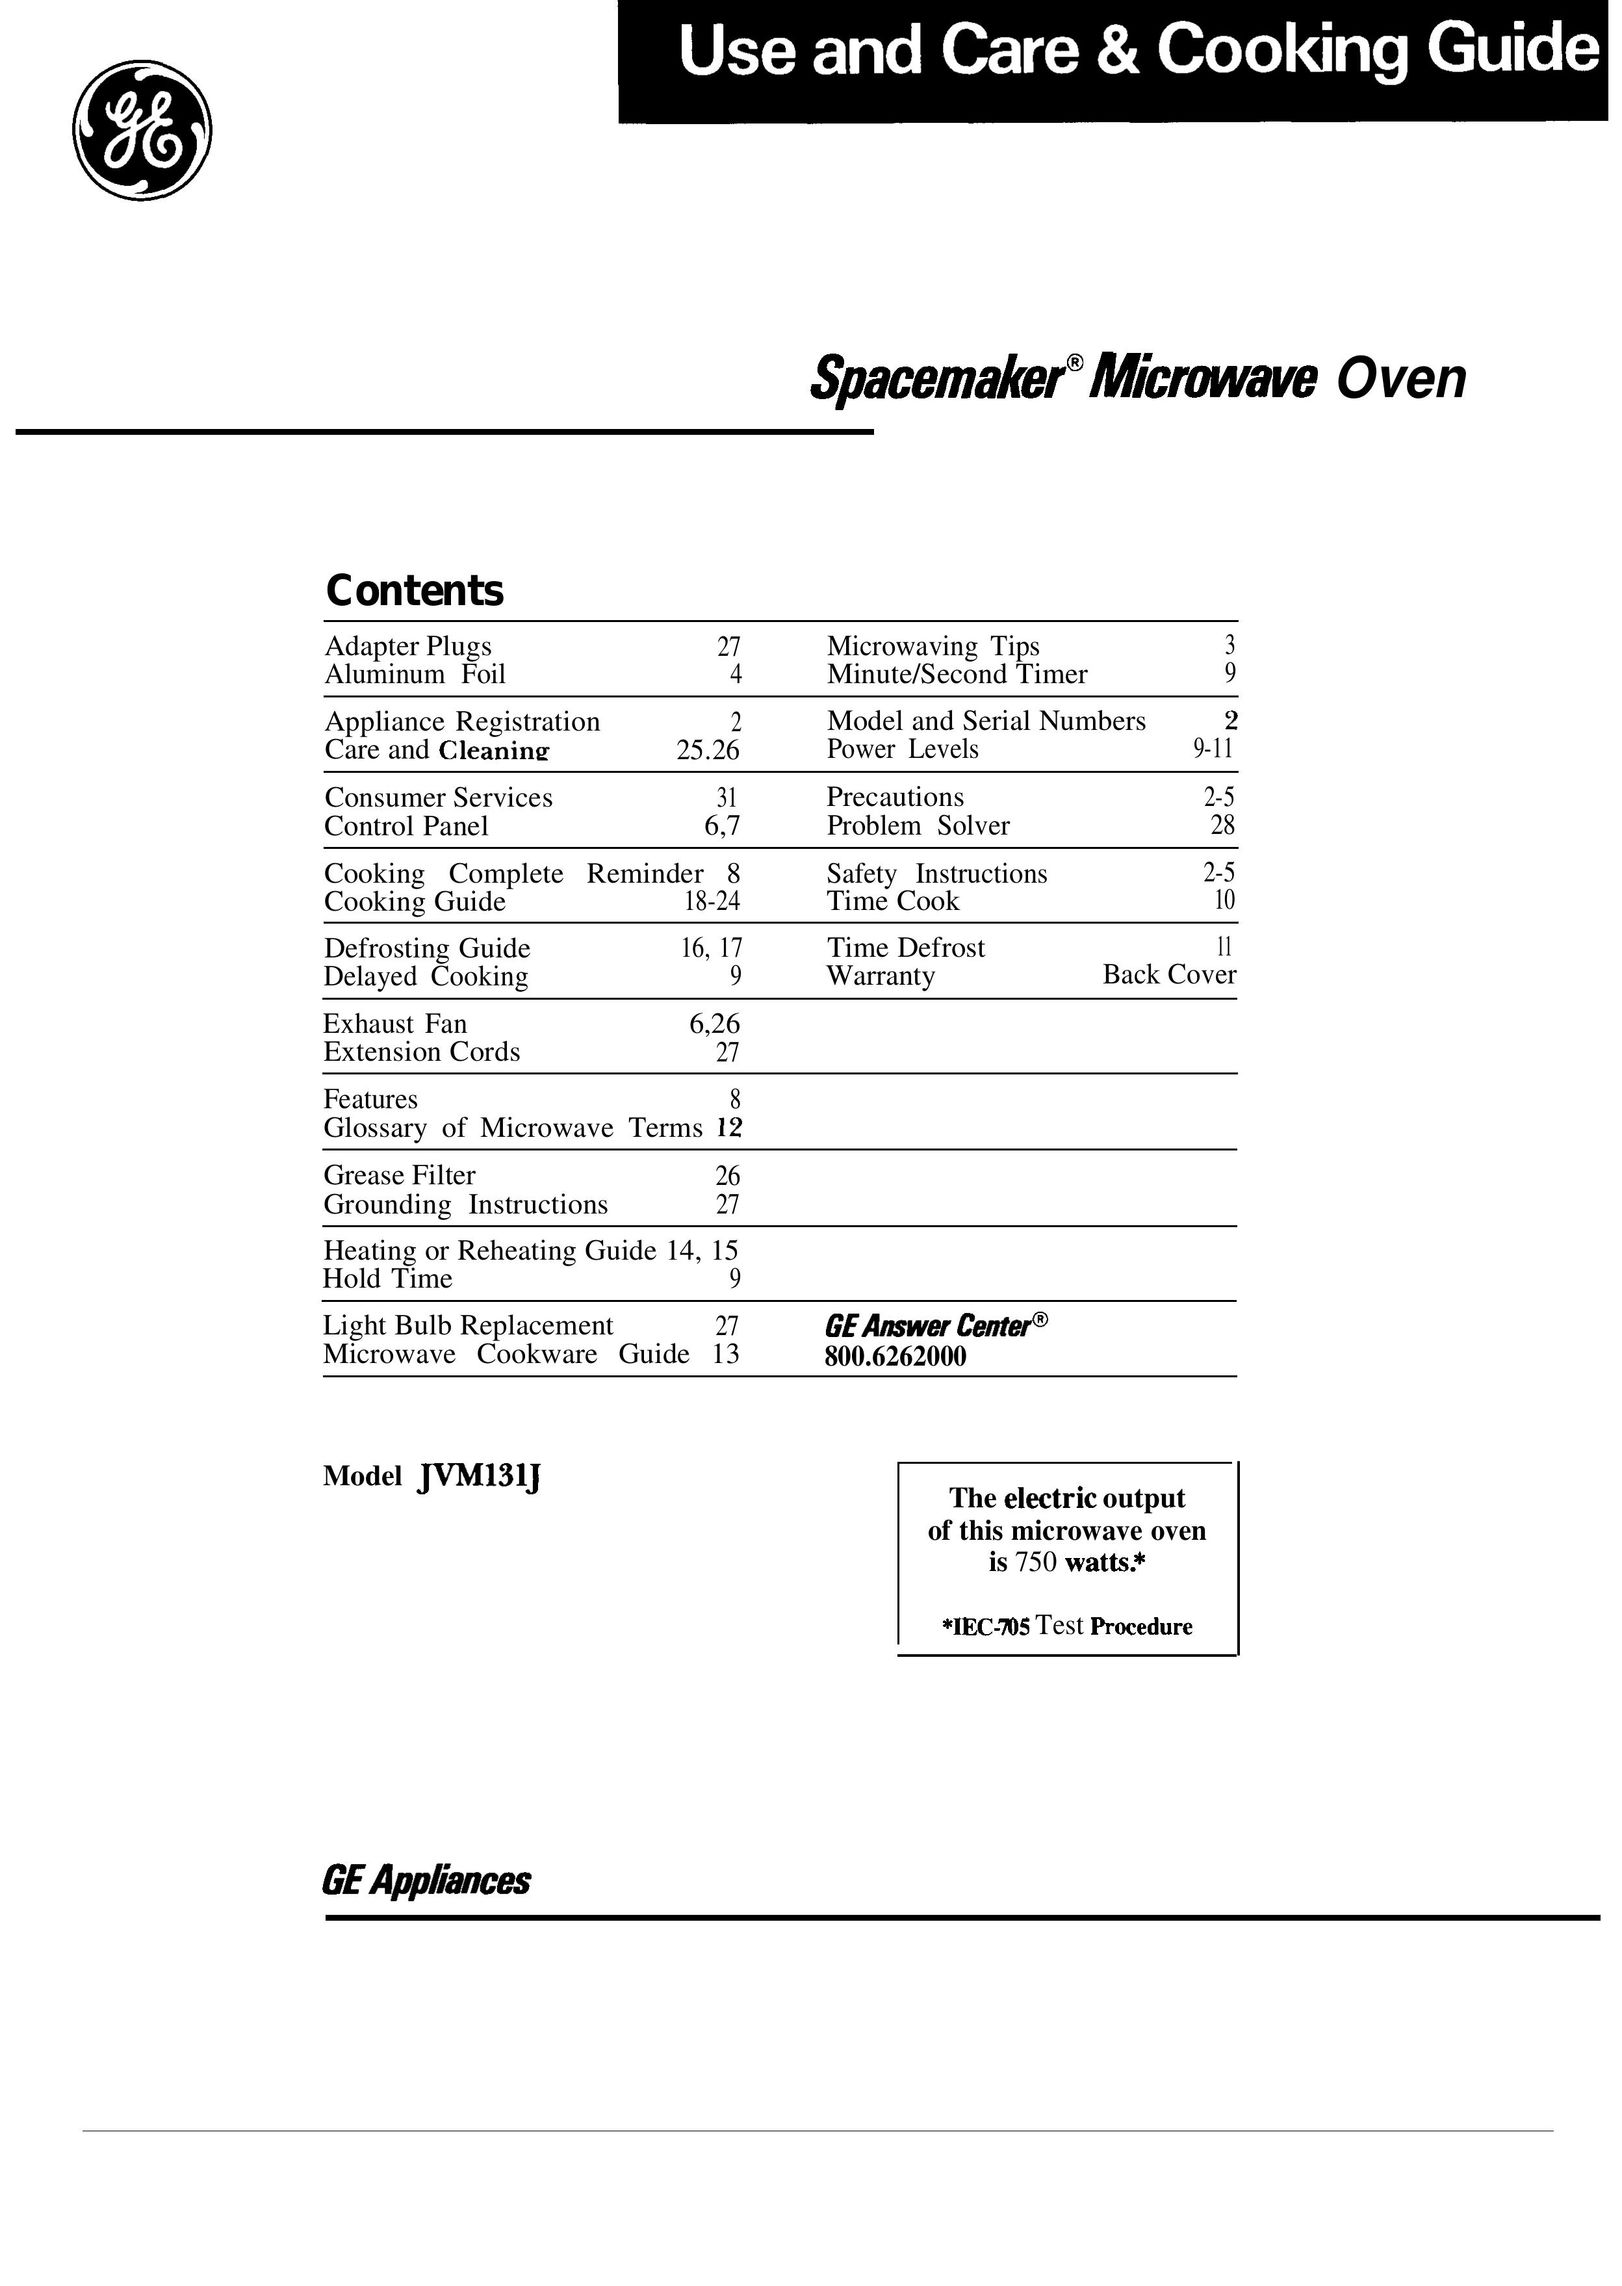 GE 49-8097 Microwave Oven User Manual